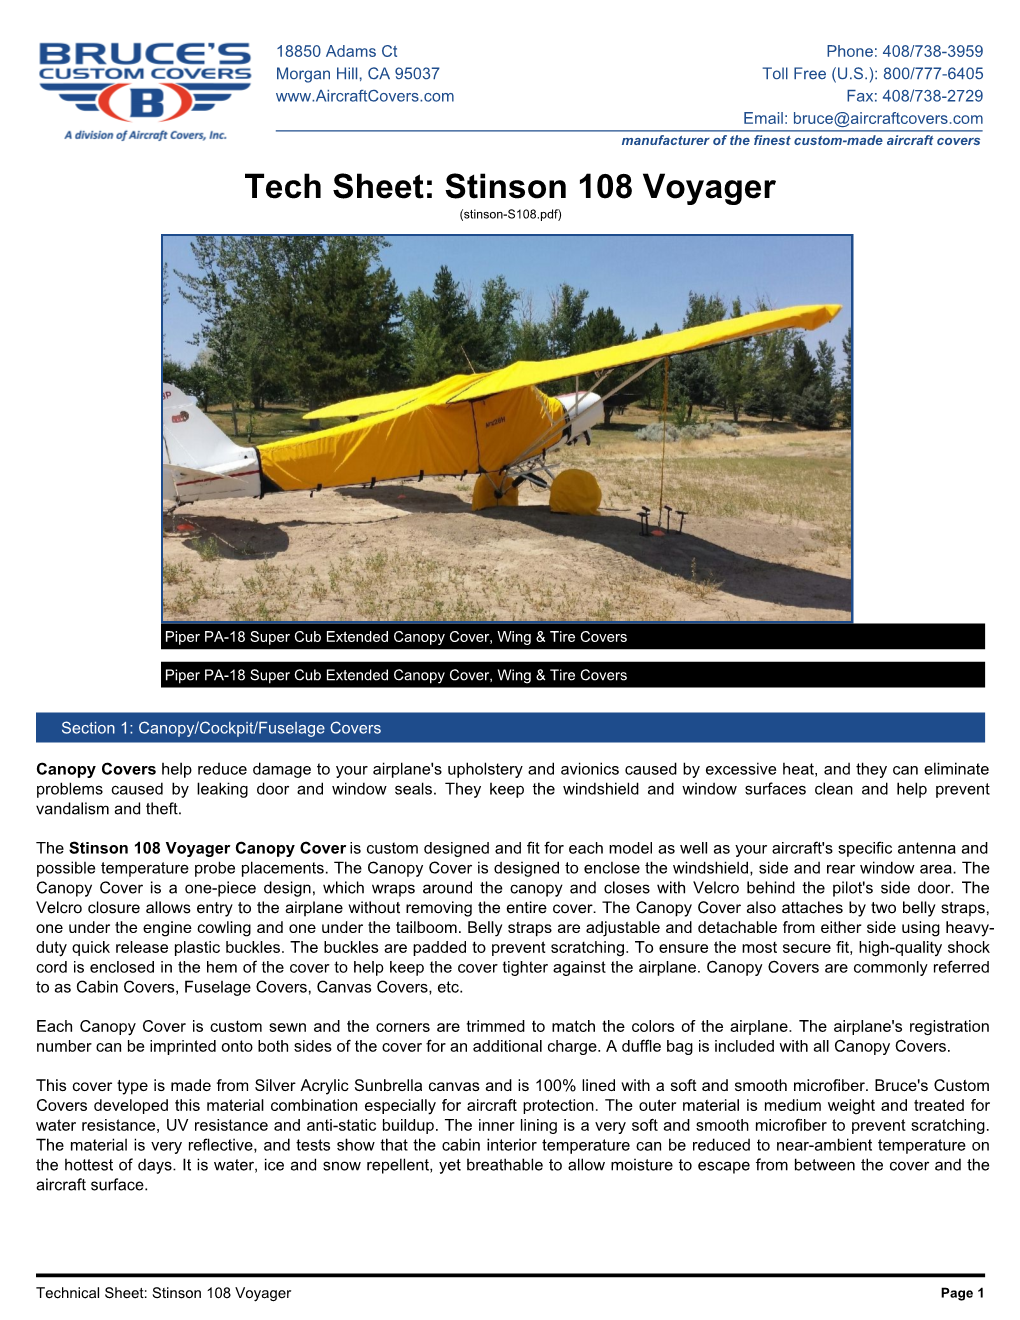 Stinson 108 Voyager (Stinson-S108.Pdf)